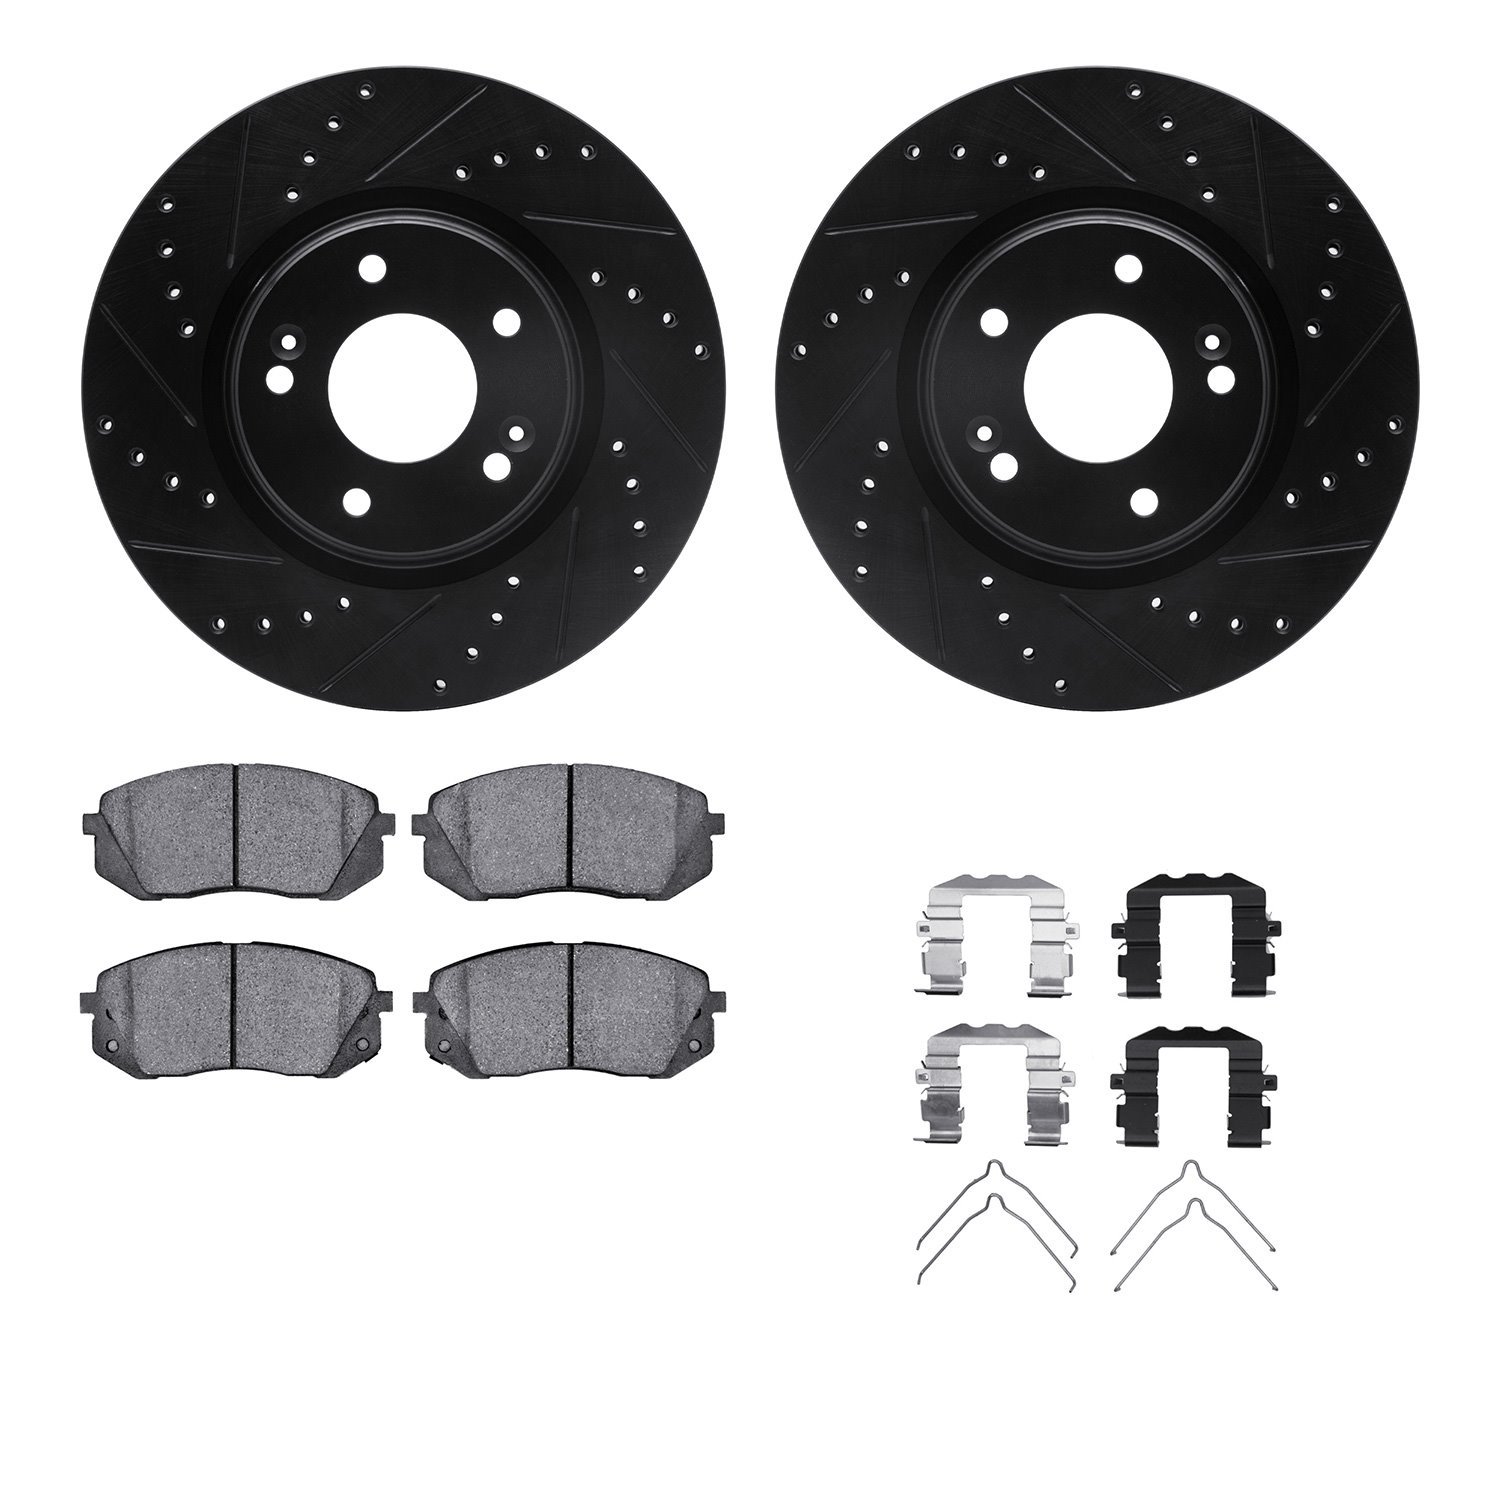 8312-03095 Drilled/Slotted Brake Rotors with 3000-Series Ceramic Brake Pads Kit & Hardware [Black], Fits Select Kia/Hyundai/Gene